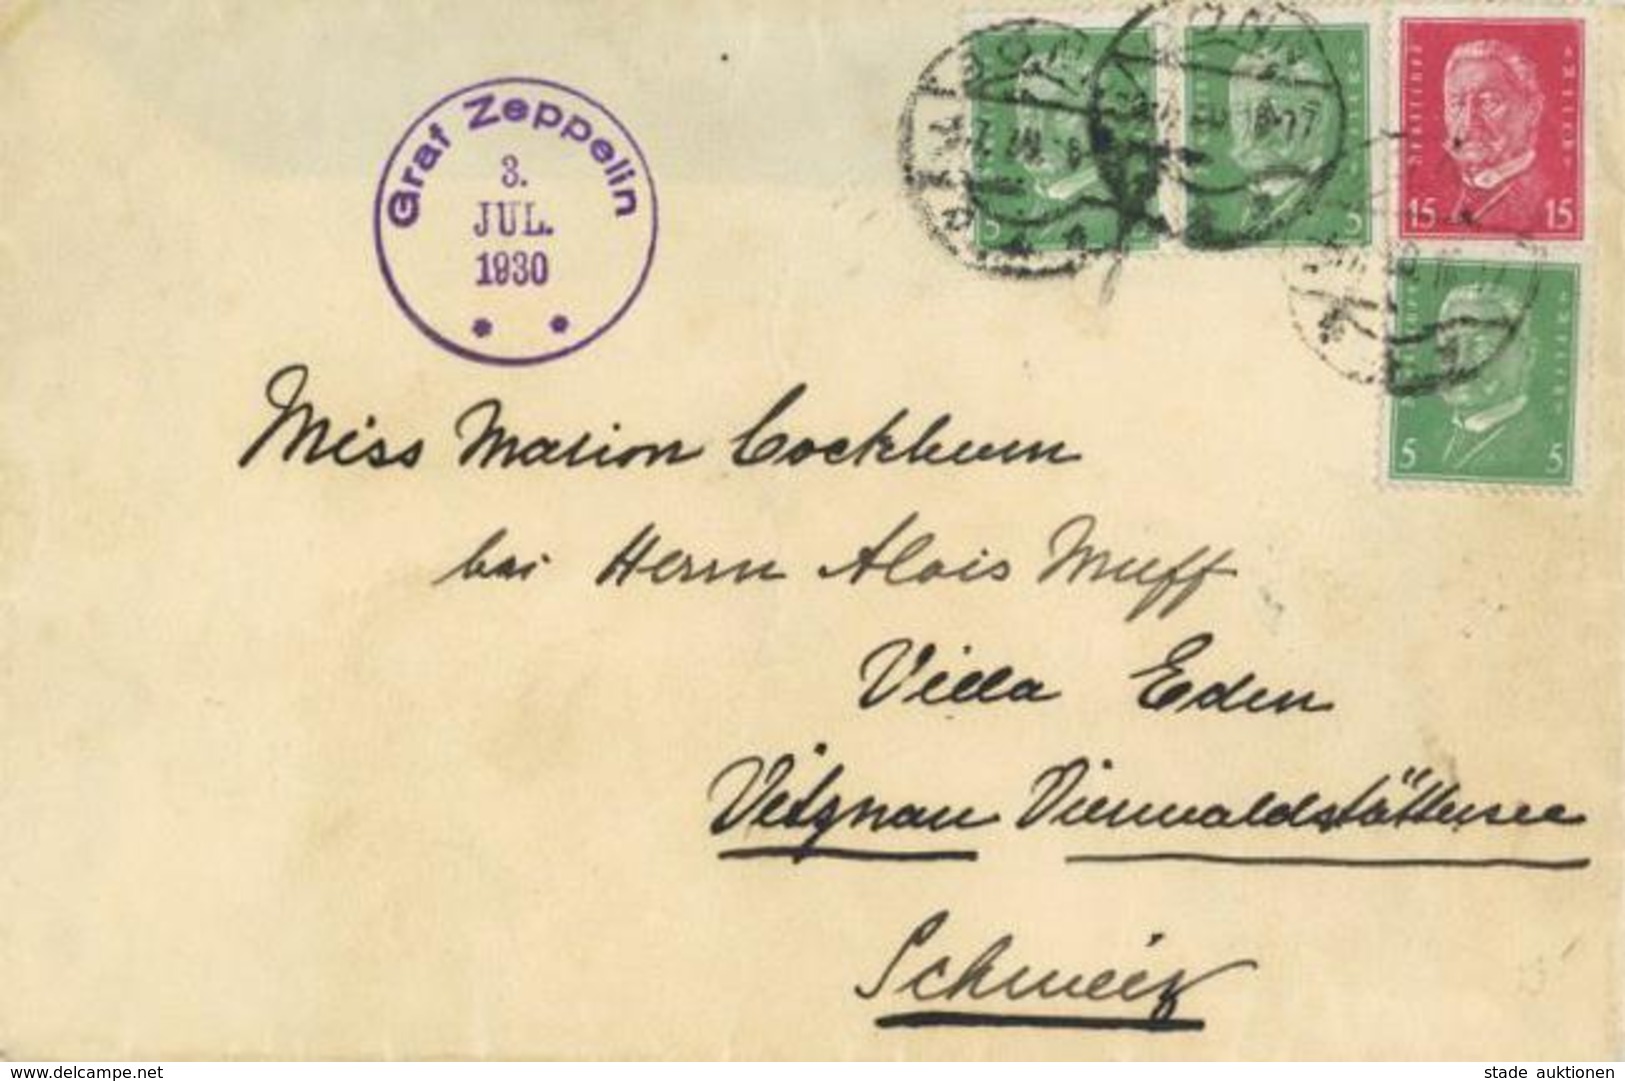 ZEPPELINPOST Sieger 71?  - Zeppelinbrief Mit Privat-o Graf Zeppelin 3.7.1930", Auflieferung "Bonn 3.7.30" I-II" Dirigeab - Zeppeline